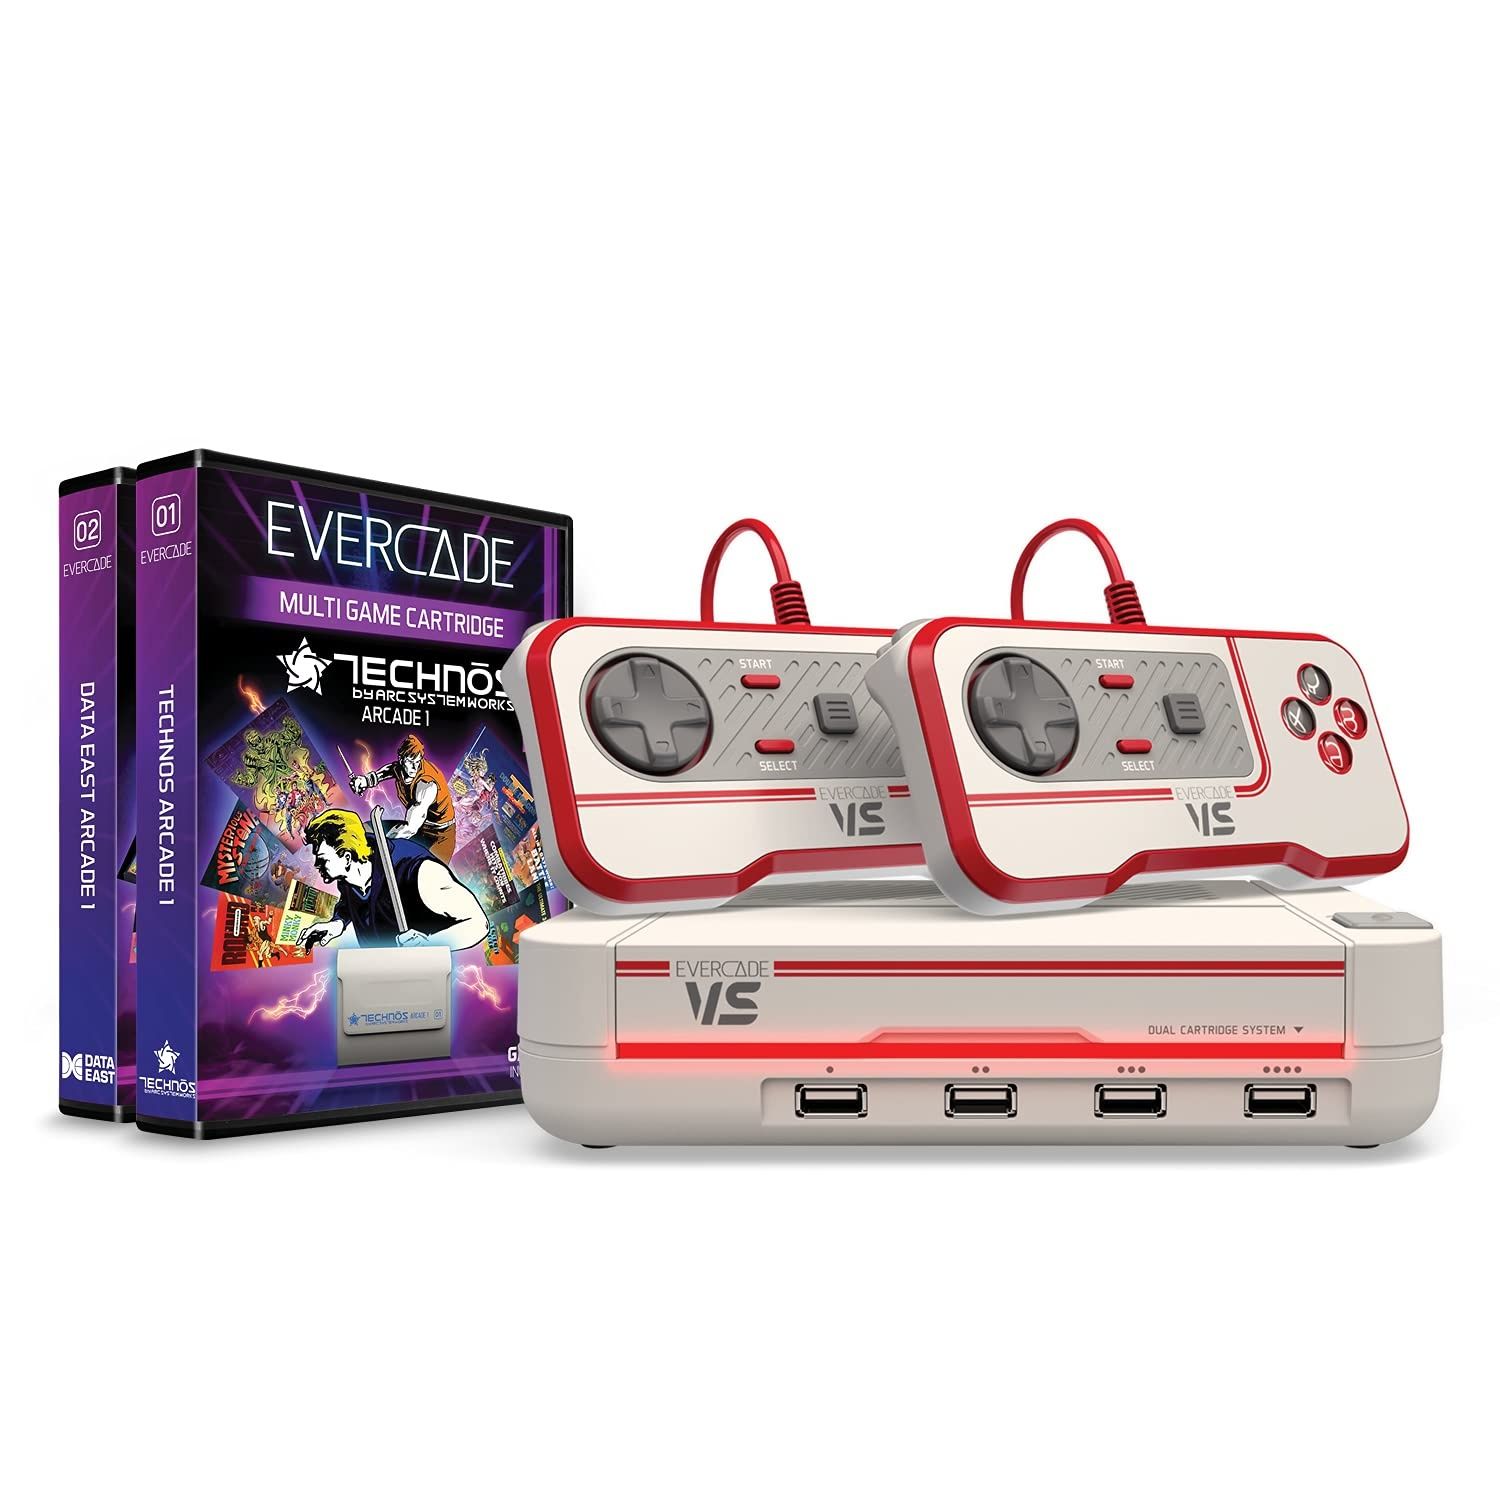 Evercade VS console and games